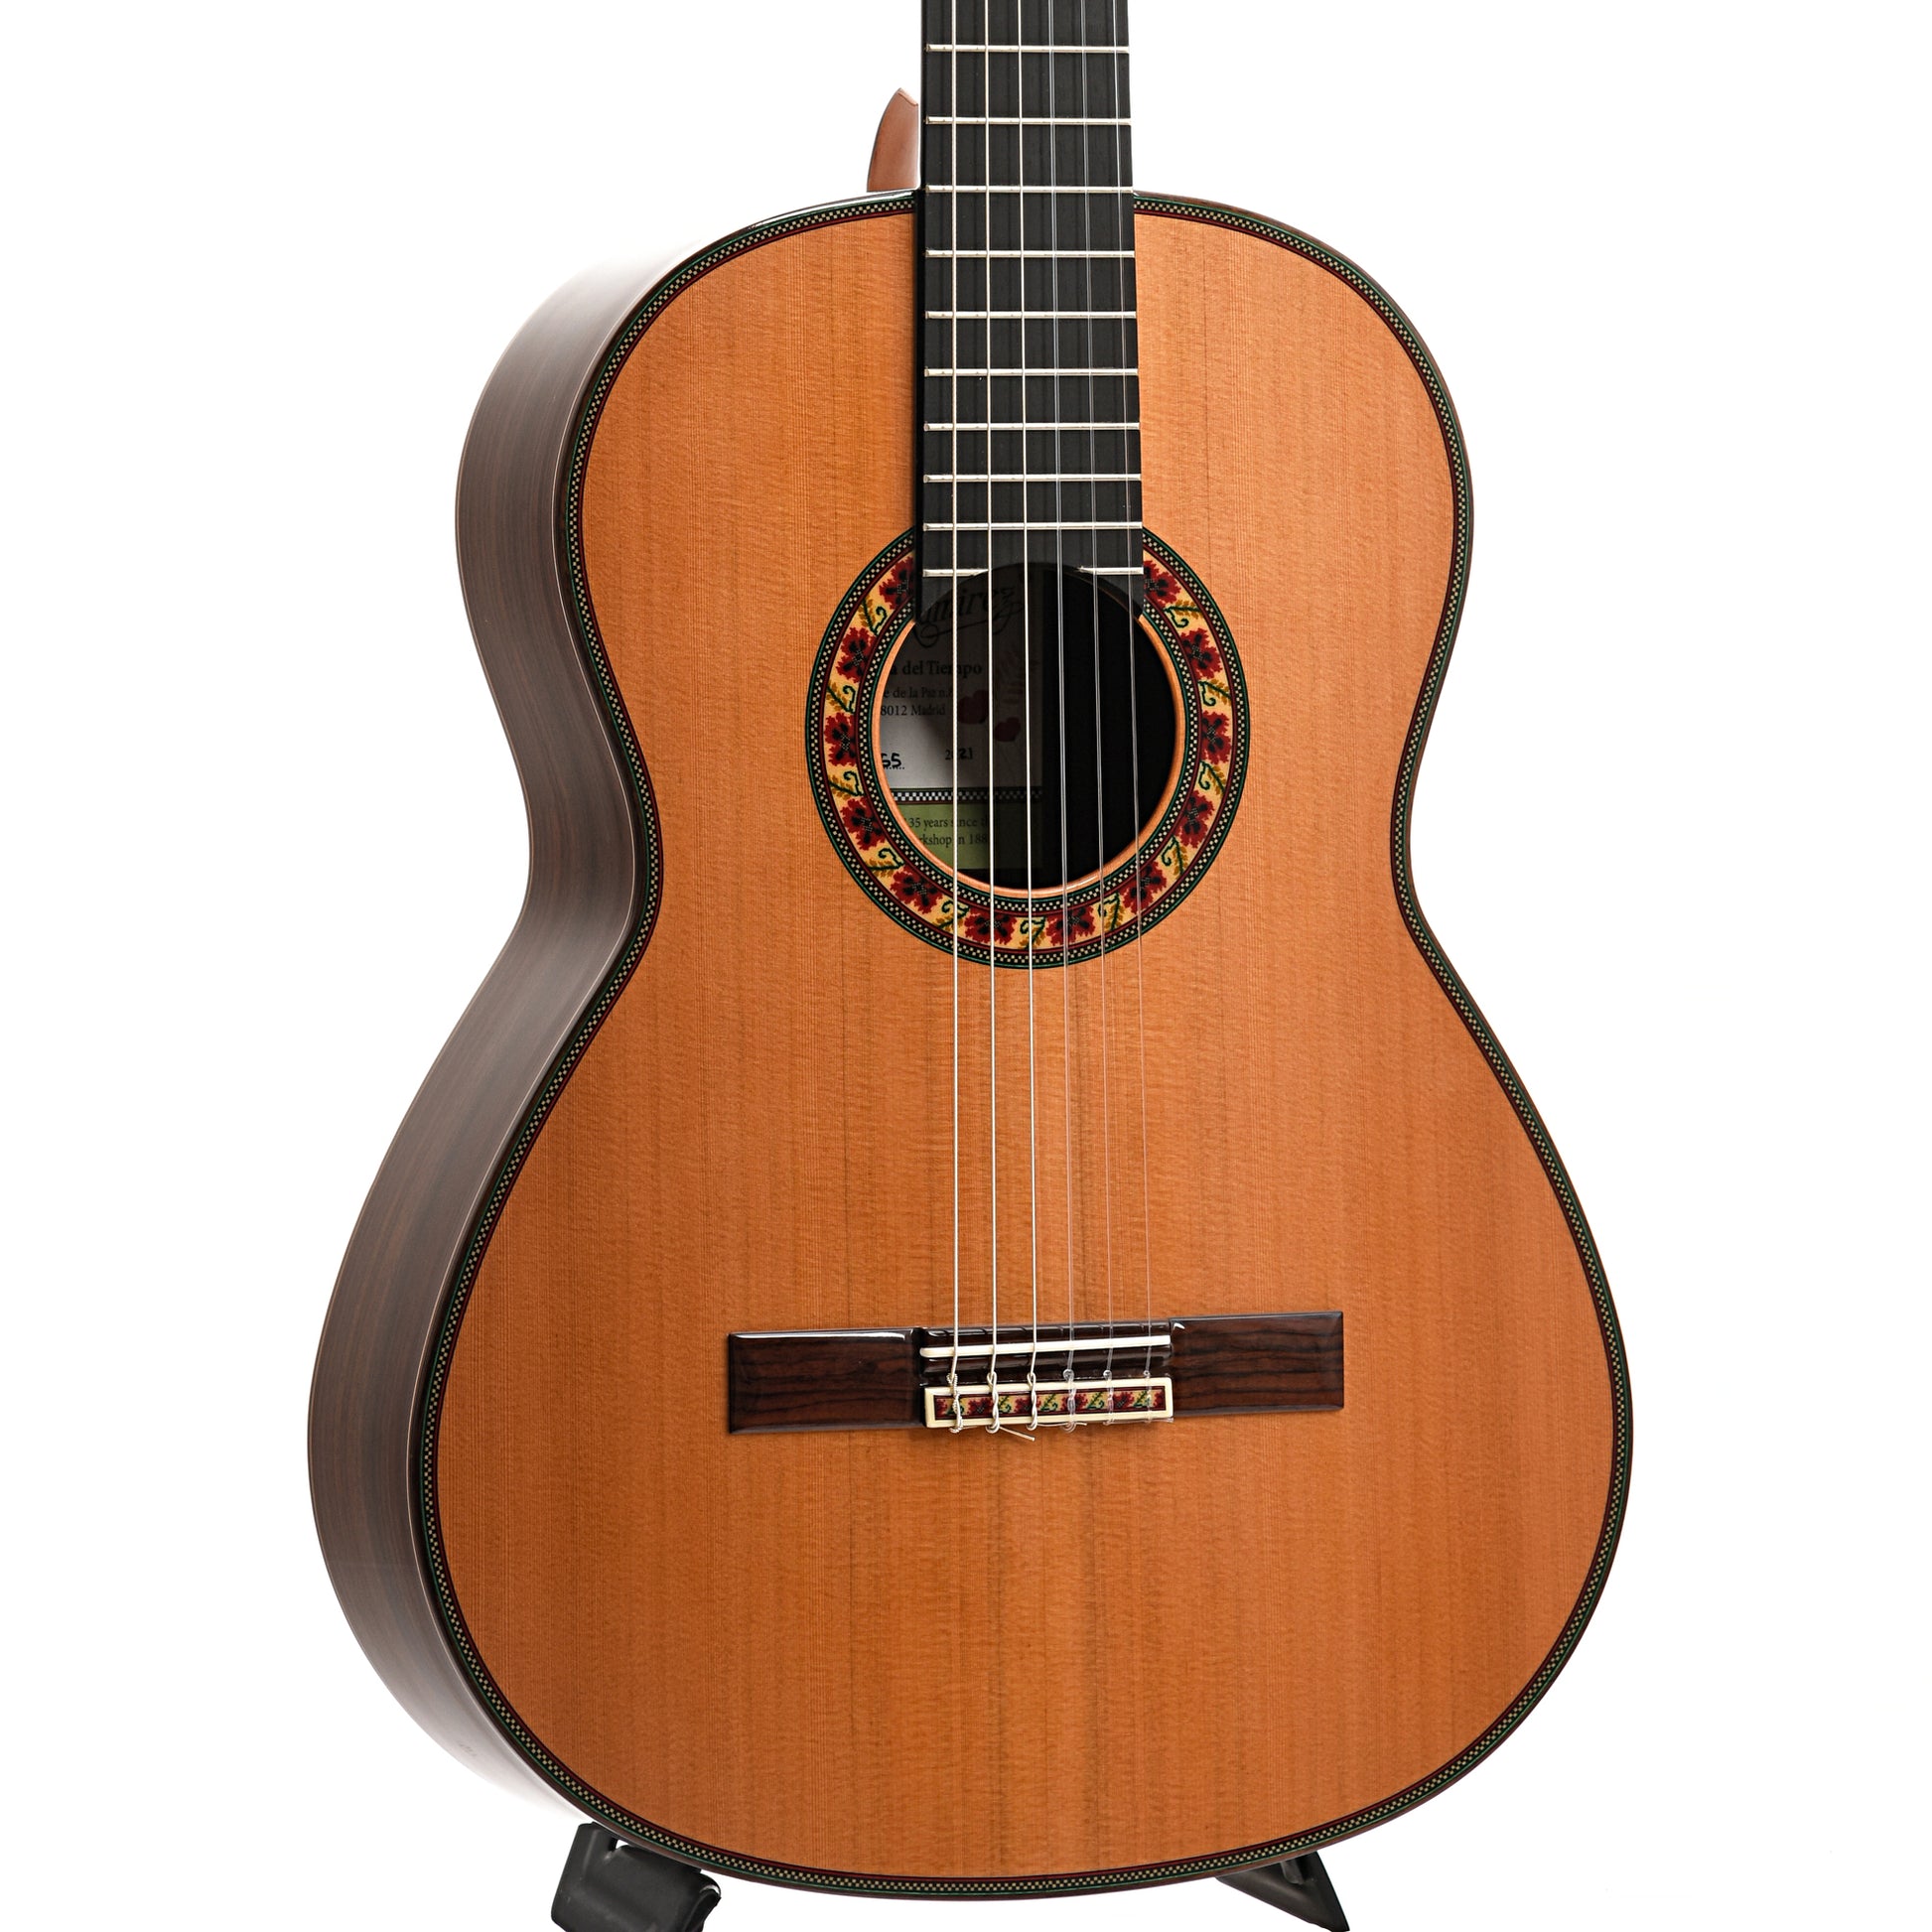 Image 4 of Jose Ramirez Guitarra Del Tiempo Classical Guitar and Case, Cedar Top Model - SKU# RAMDELTC : Product Type Classical & Flamenco Guitars : Elderly Instruments